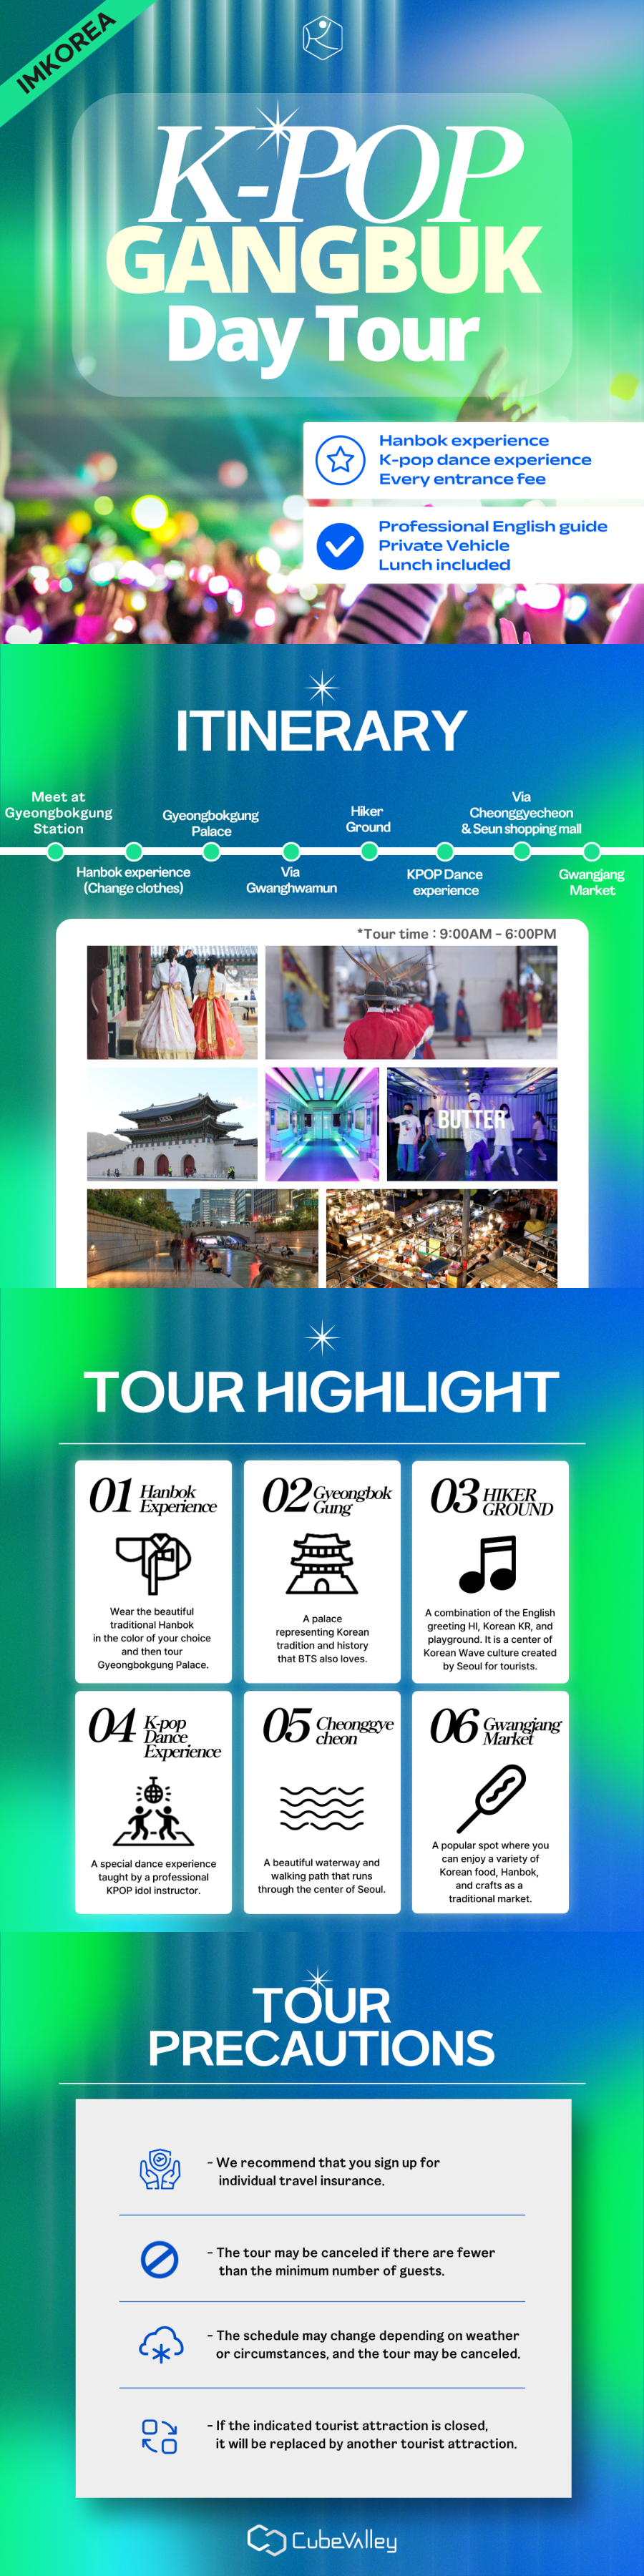 [Day Tour] K-Pop Gangbuk Tour